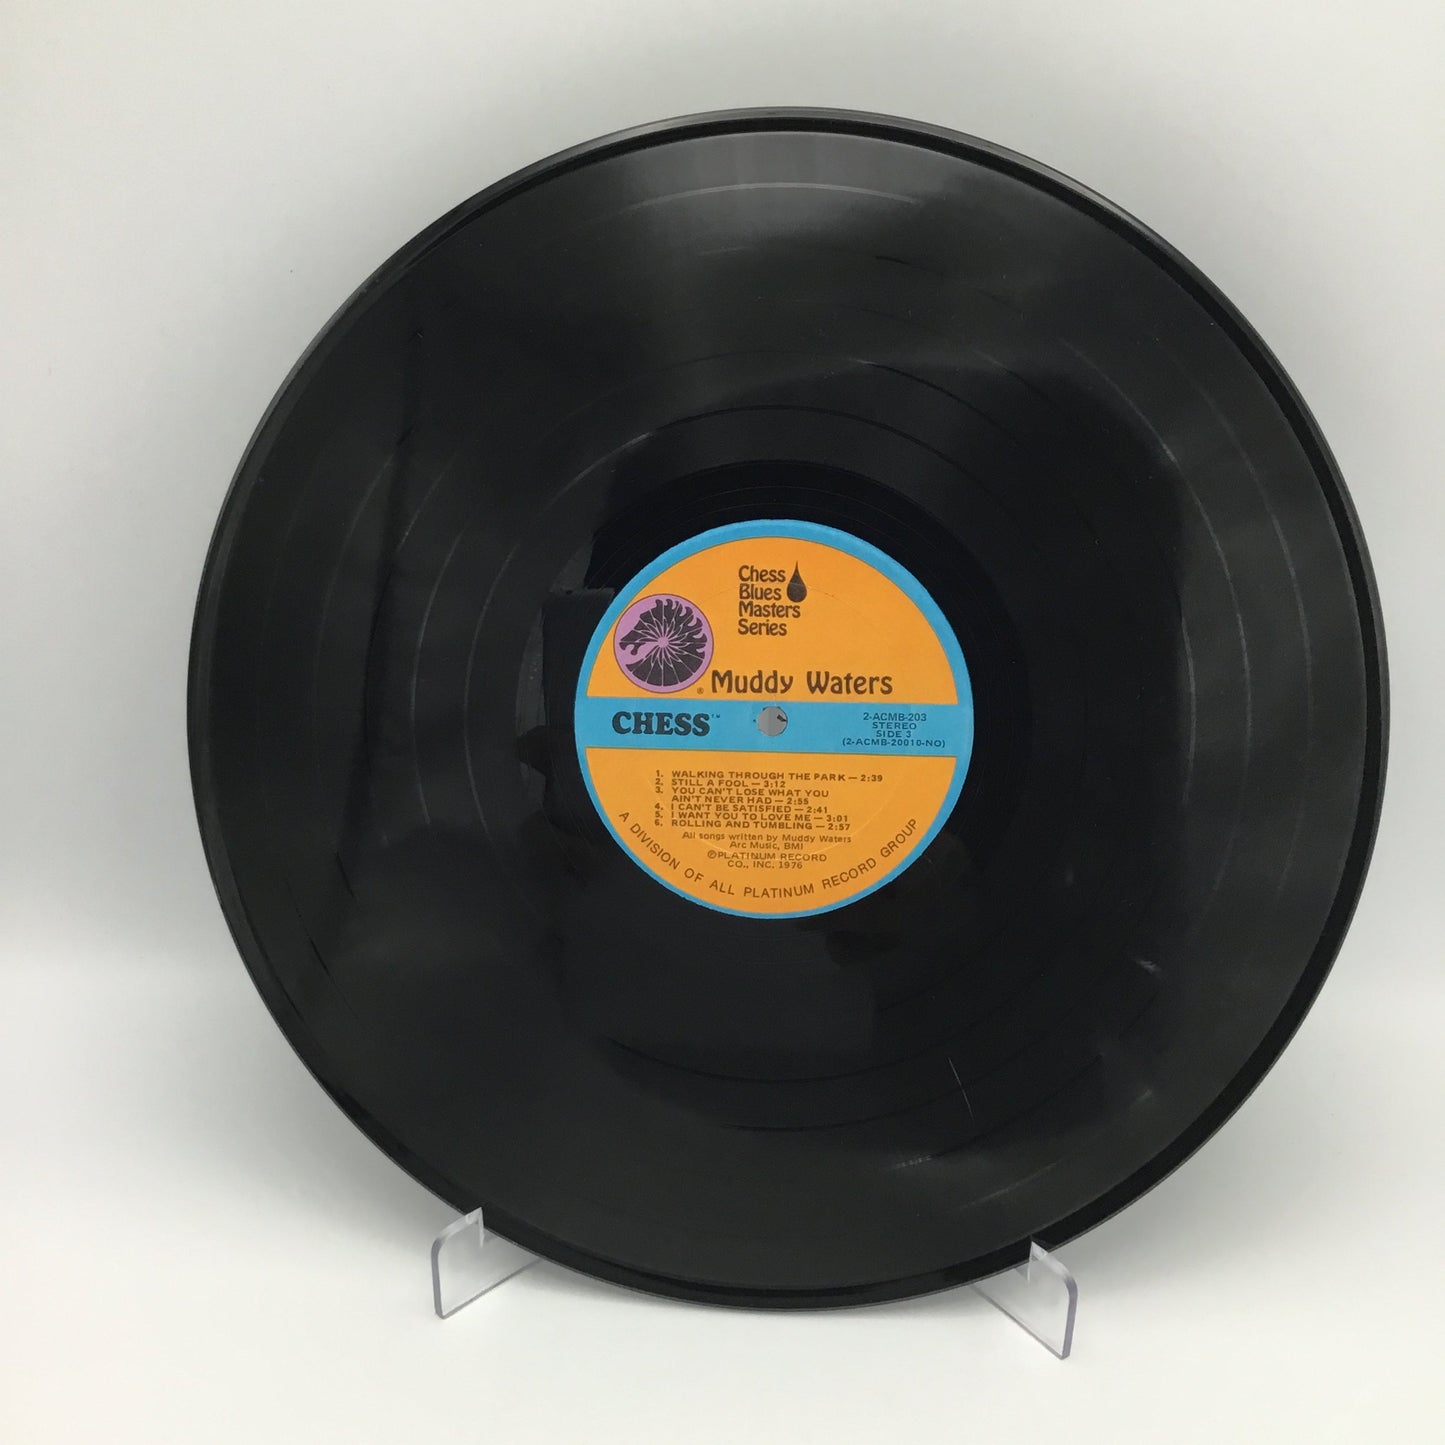 1972 Muddy Waters - Chess Blues Masters Series 2 x Lp Vinyl 2ACMB-203